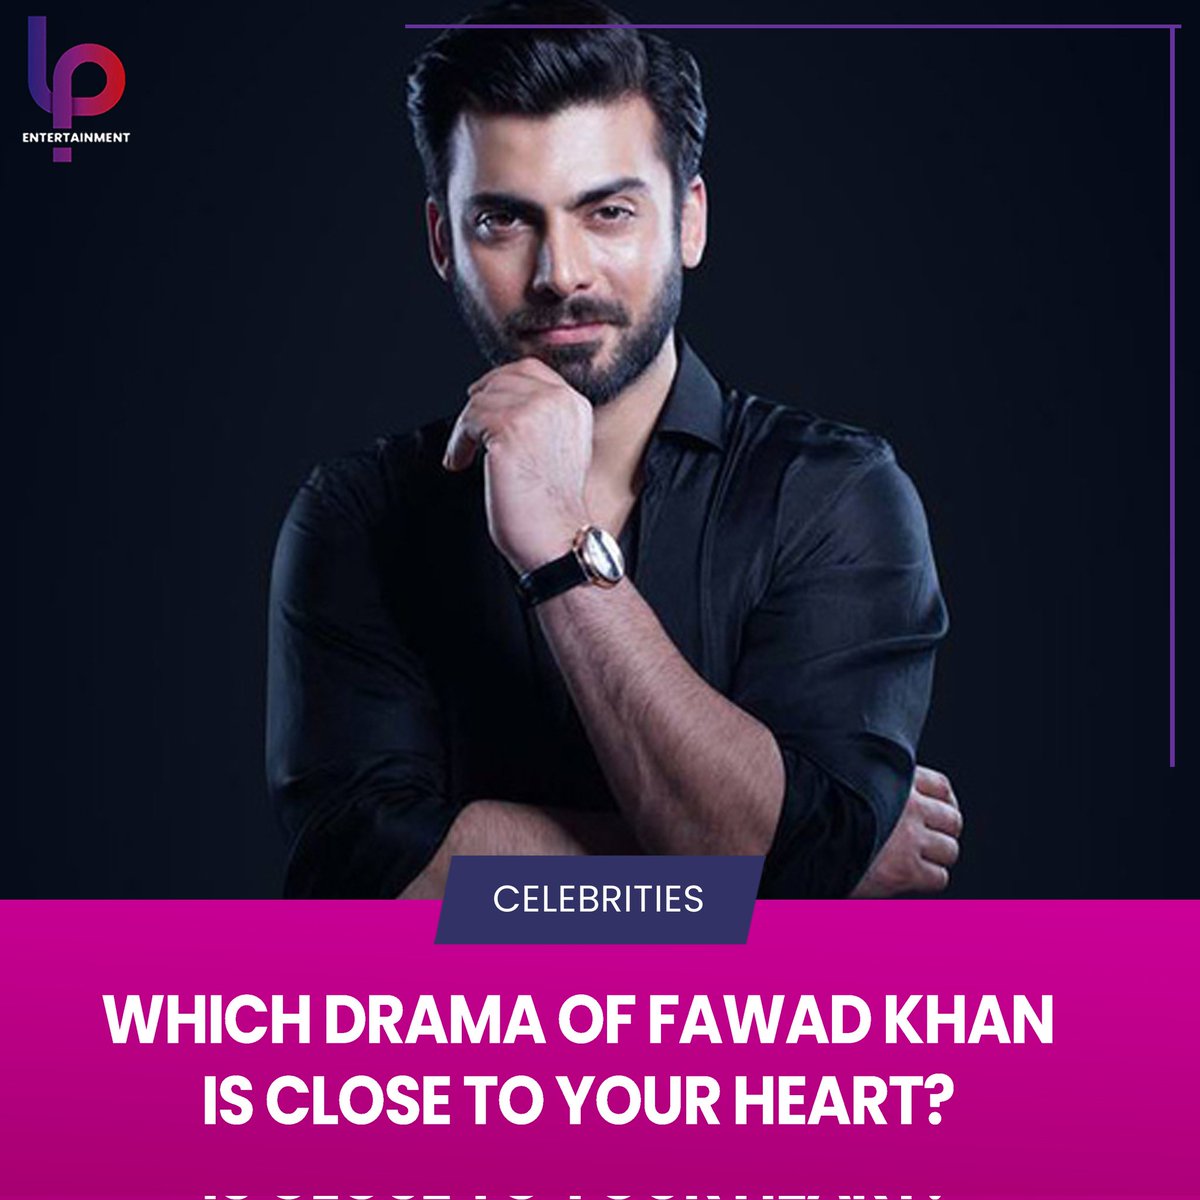 Fawad Khan has given the audience some blockbuster dramas, especially Zindagi Gulzar Hai, Dastaan and Hamsafar. 

Which Drama of Fawad Khan you likes the most? 

#FawadKhan #zindagigulzarhai #hamsafar #dastaan #khudakayliye #thelegendofmaulajatt #kapoorandsons #LPEntertainment